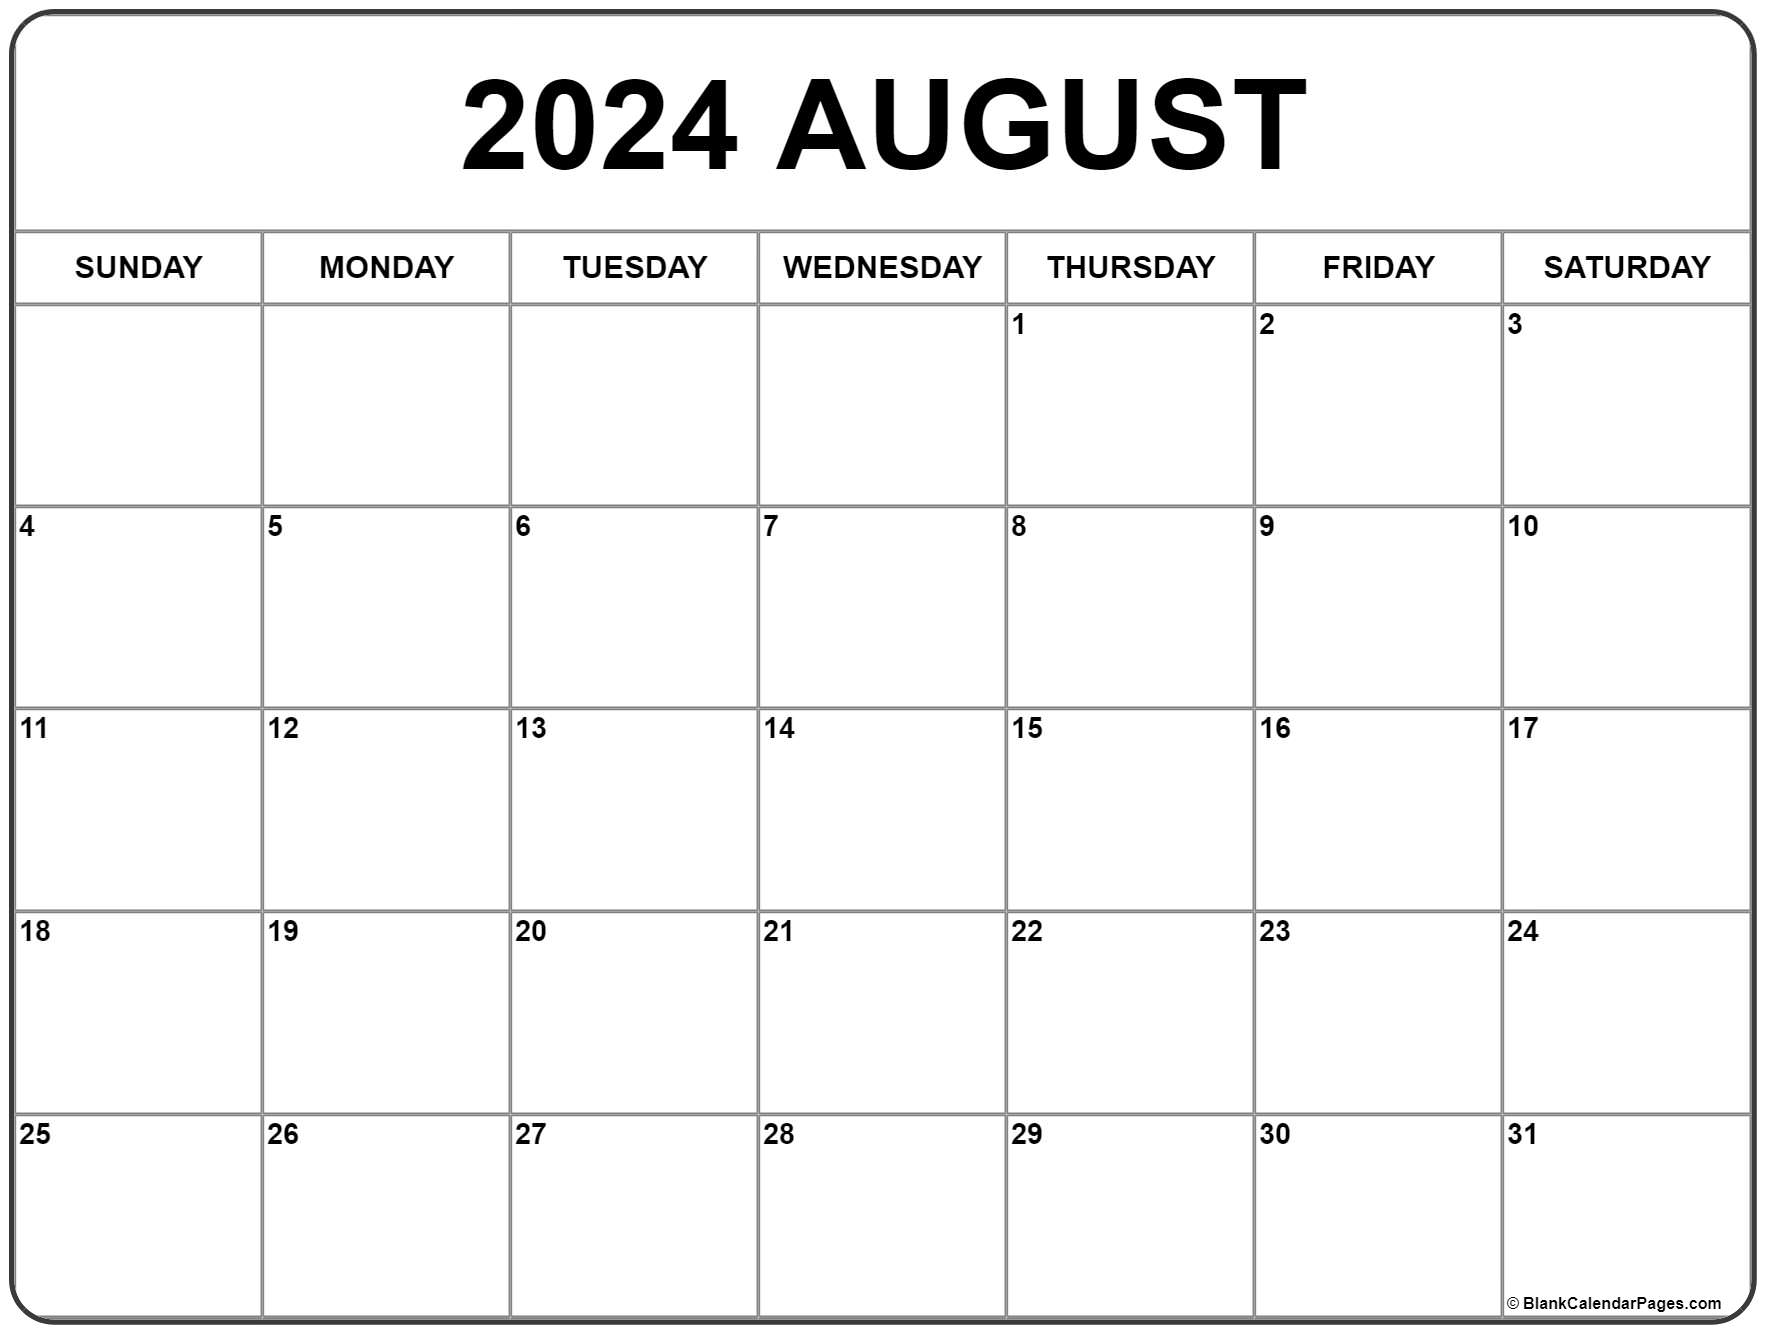 Blank Calendar August 2021 Printable August 2021 calendar | free printable monthly calendars